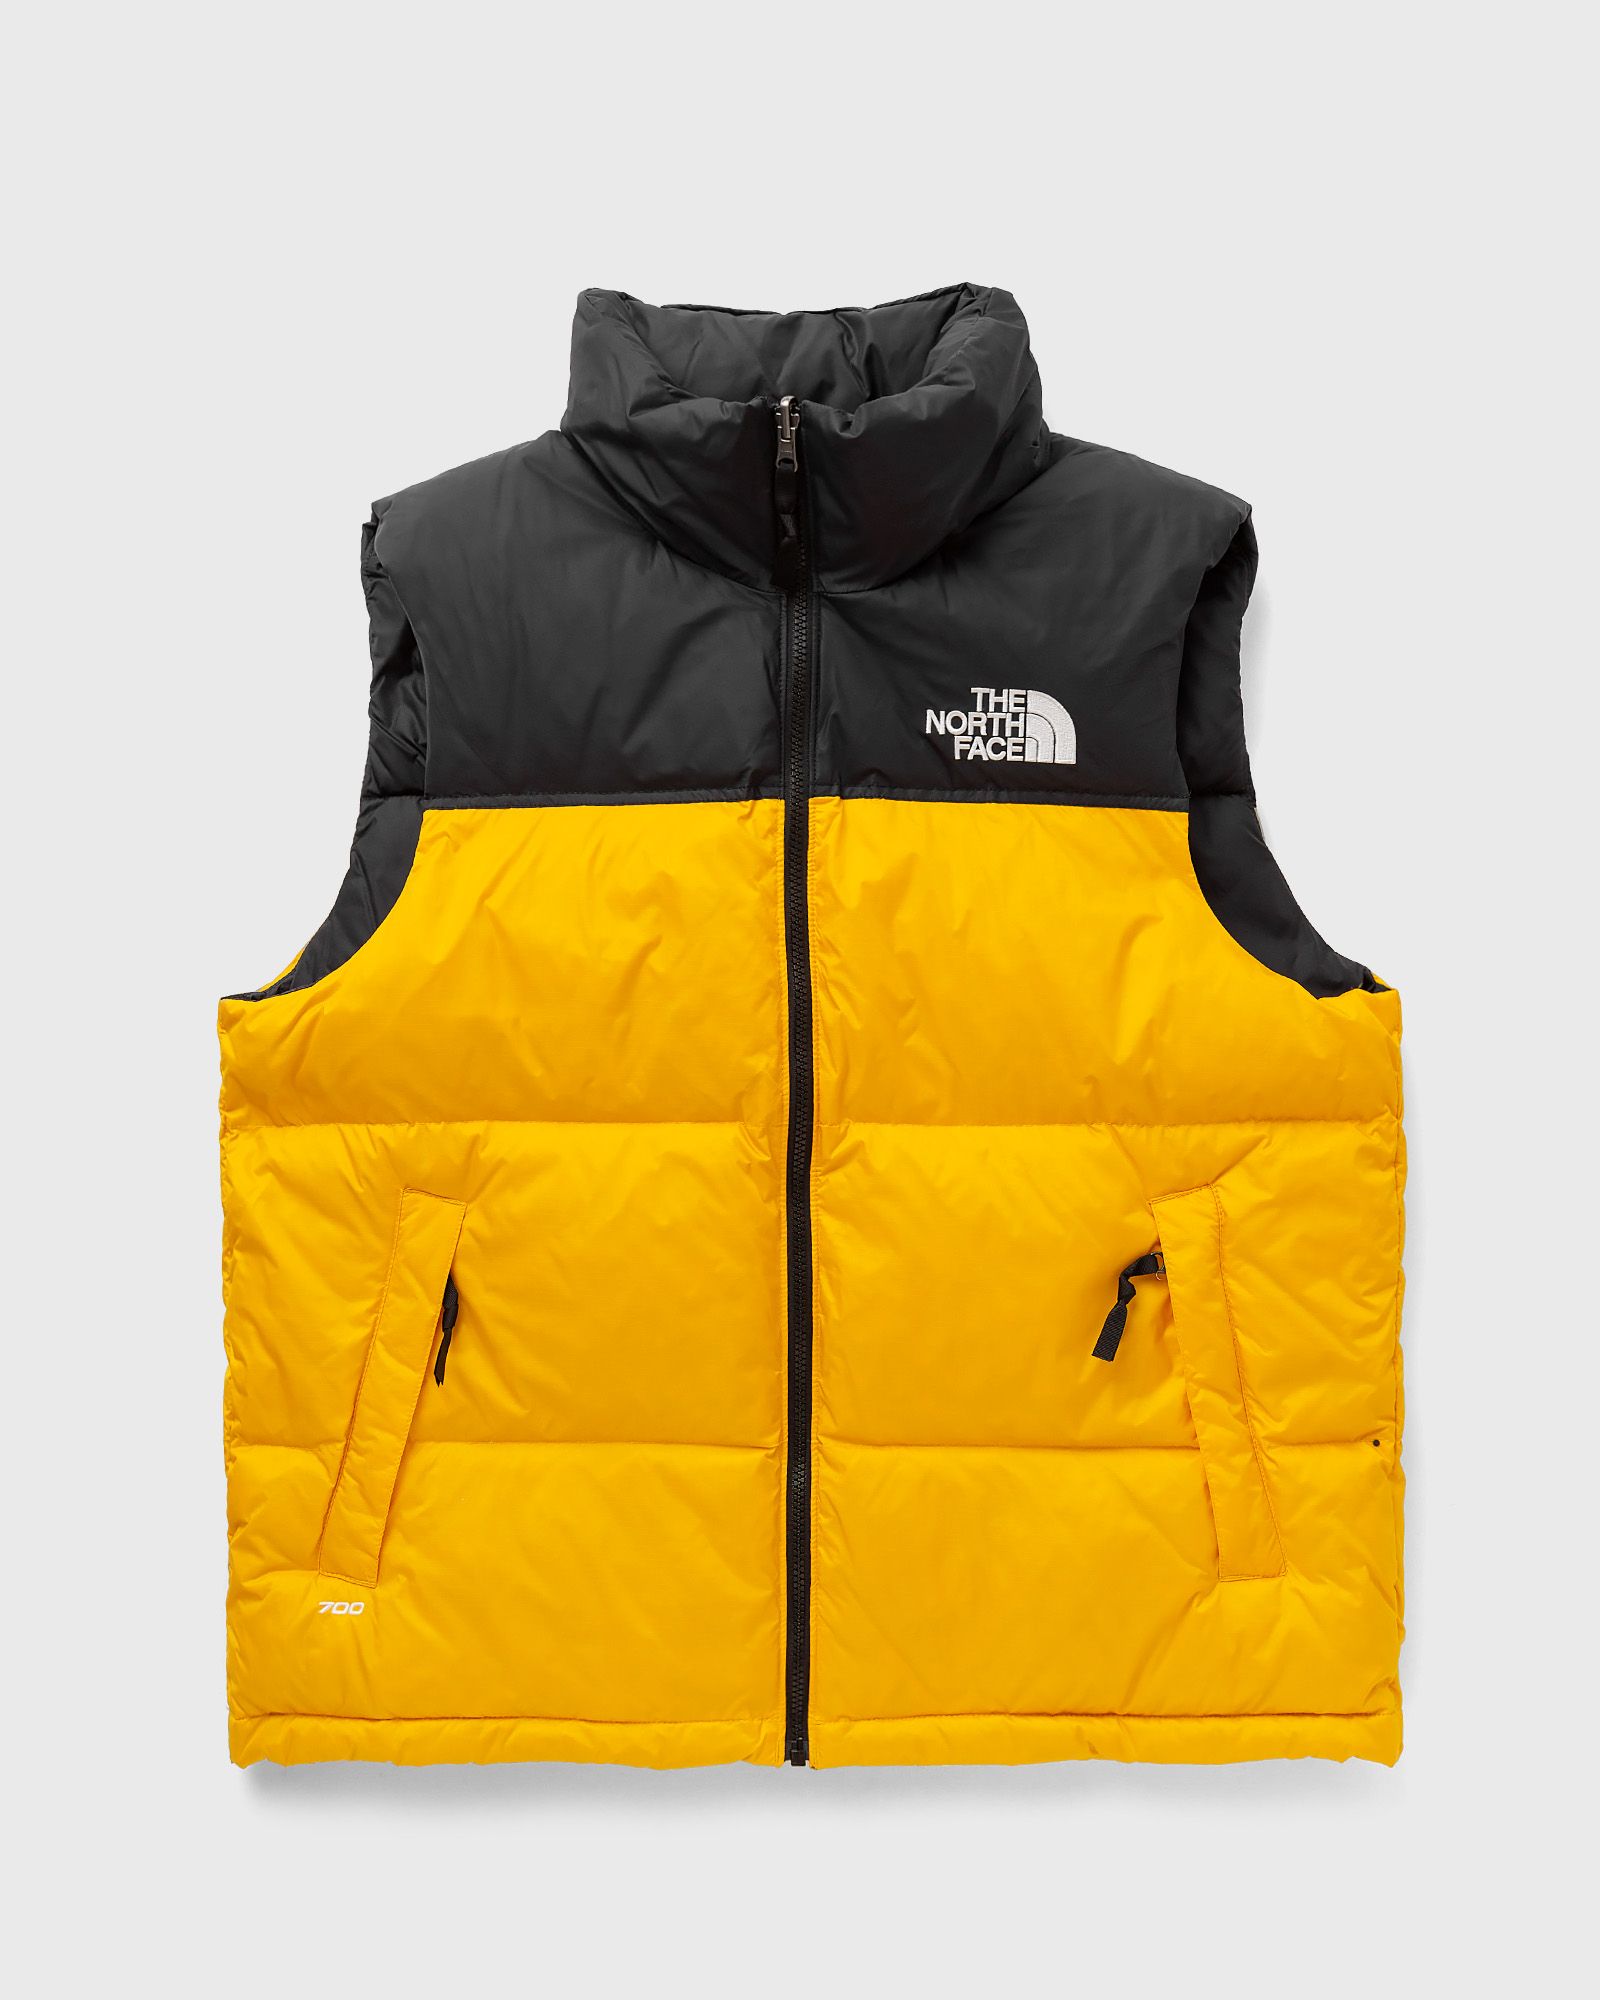 The North Face 1996 Retro Nuptse Vest men Vests black|yellow in Größe:L von The North Face